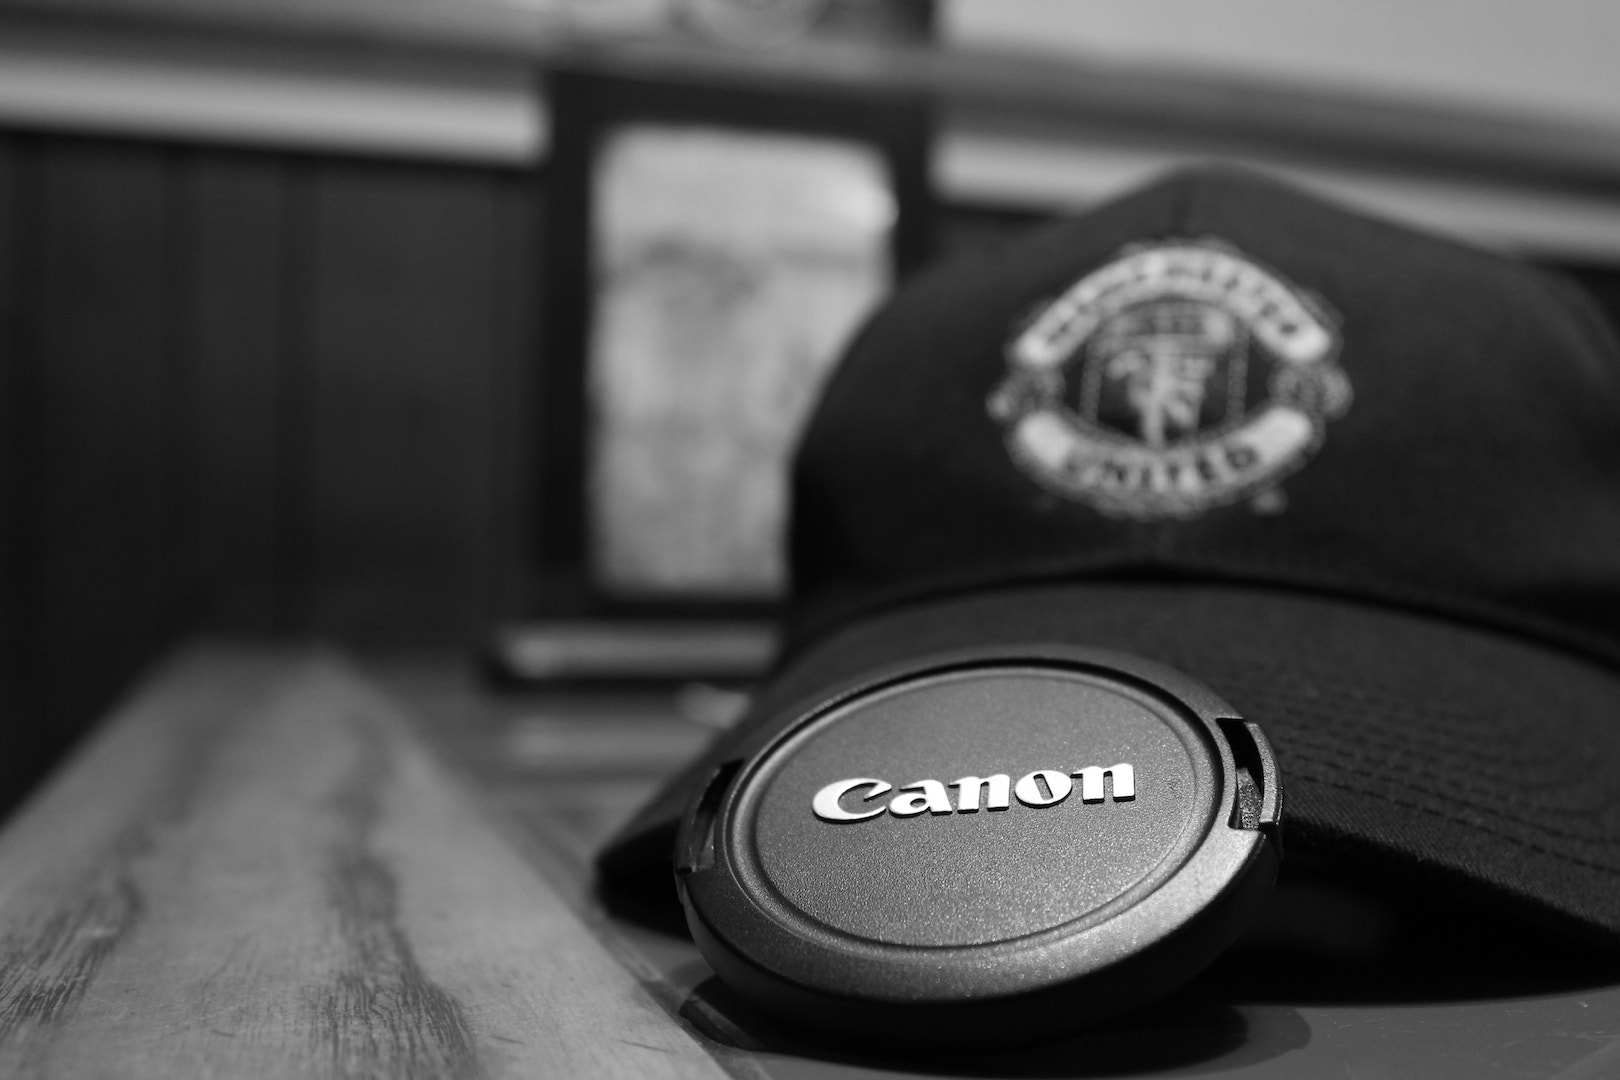 Canon <3 Manchester united